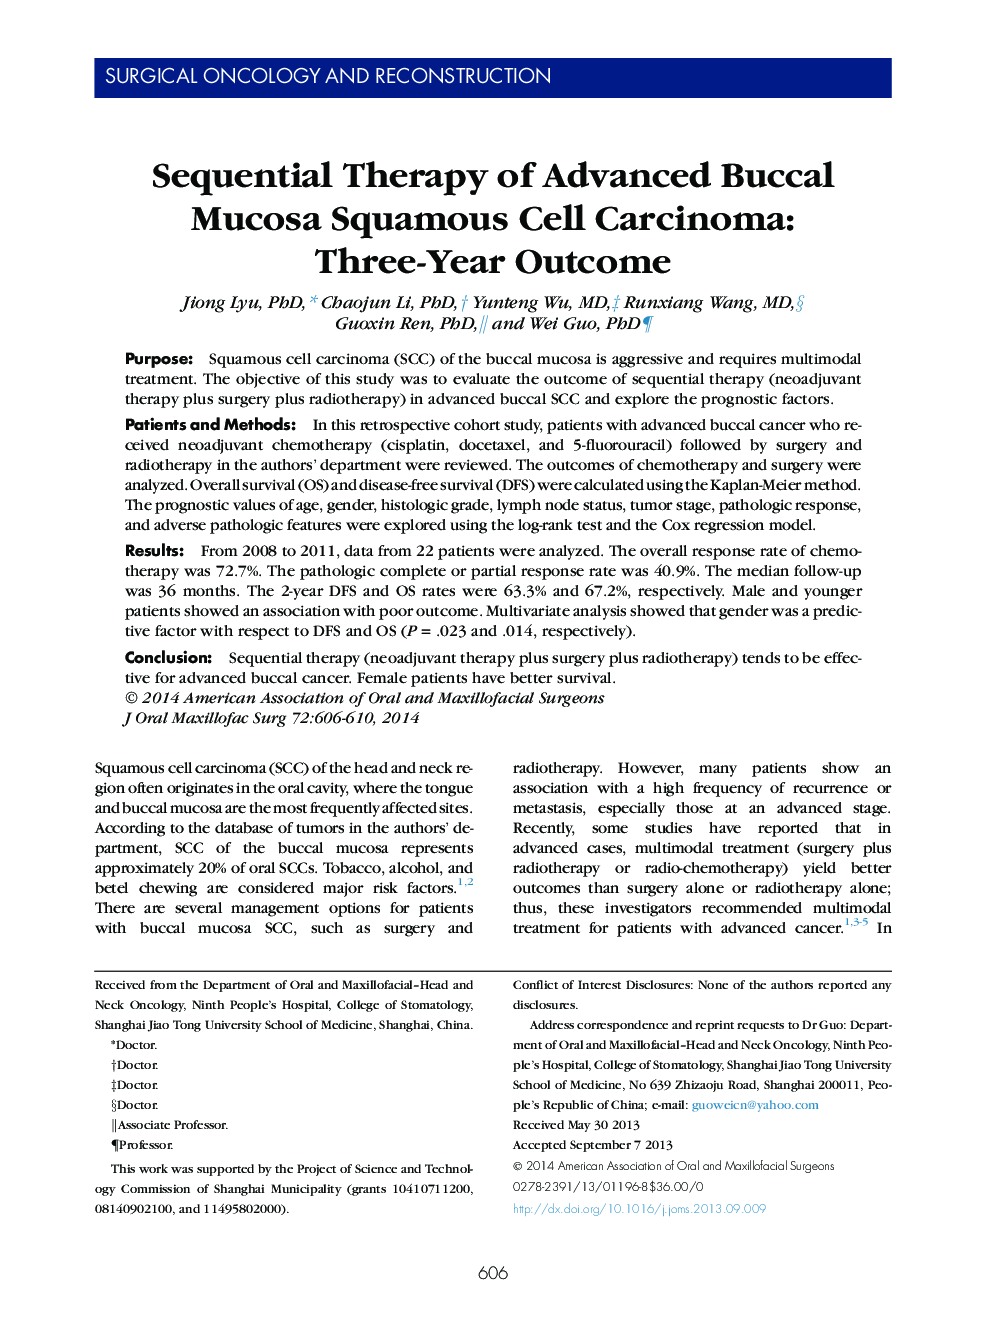 درمان متوالی از کارسینوم سلول سنگفرشی مخاطی پیشرفته باکال: نتایج سه ساله 